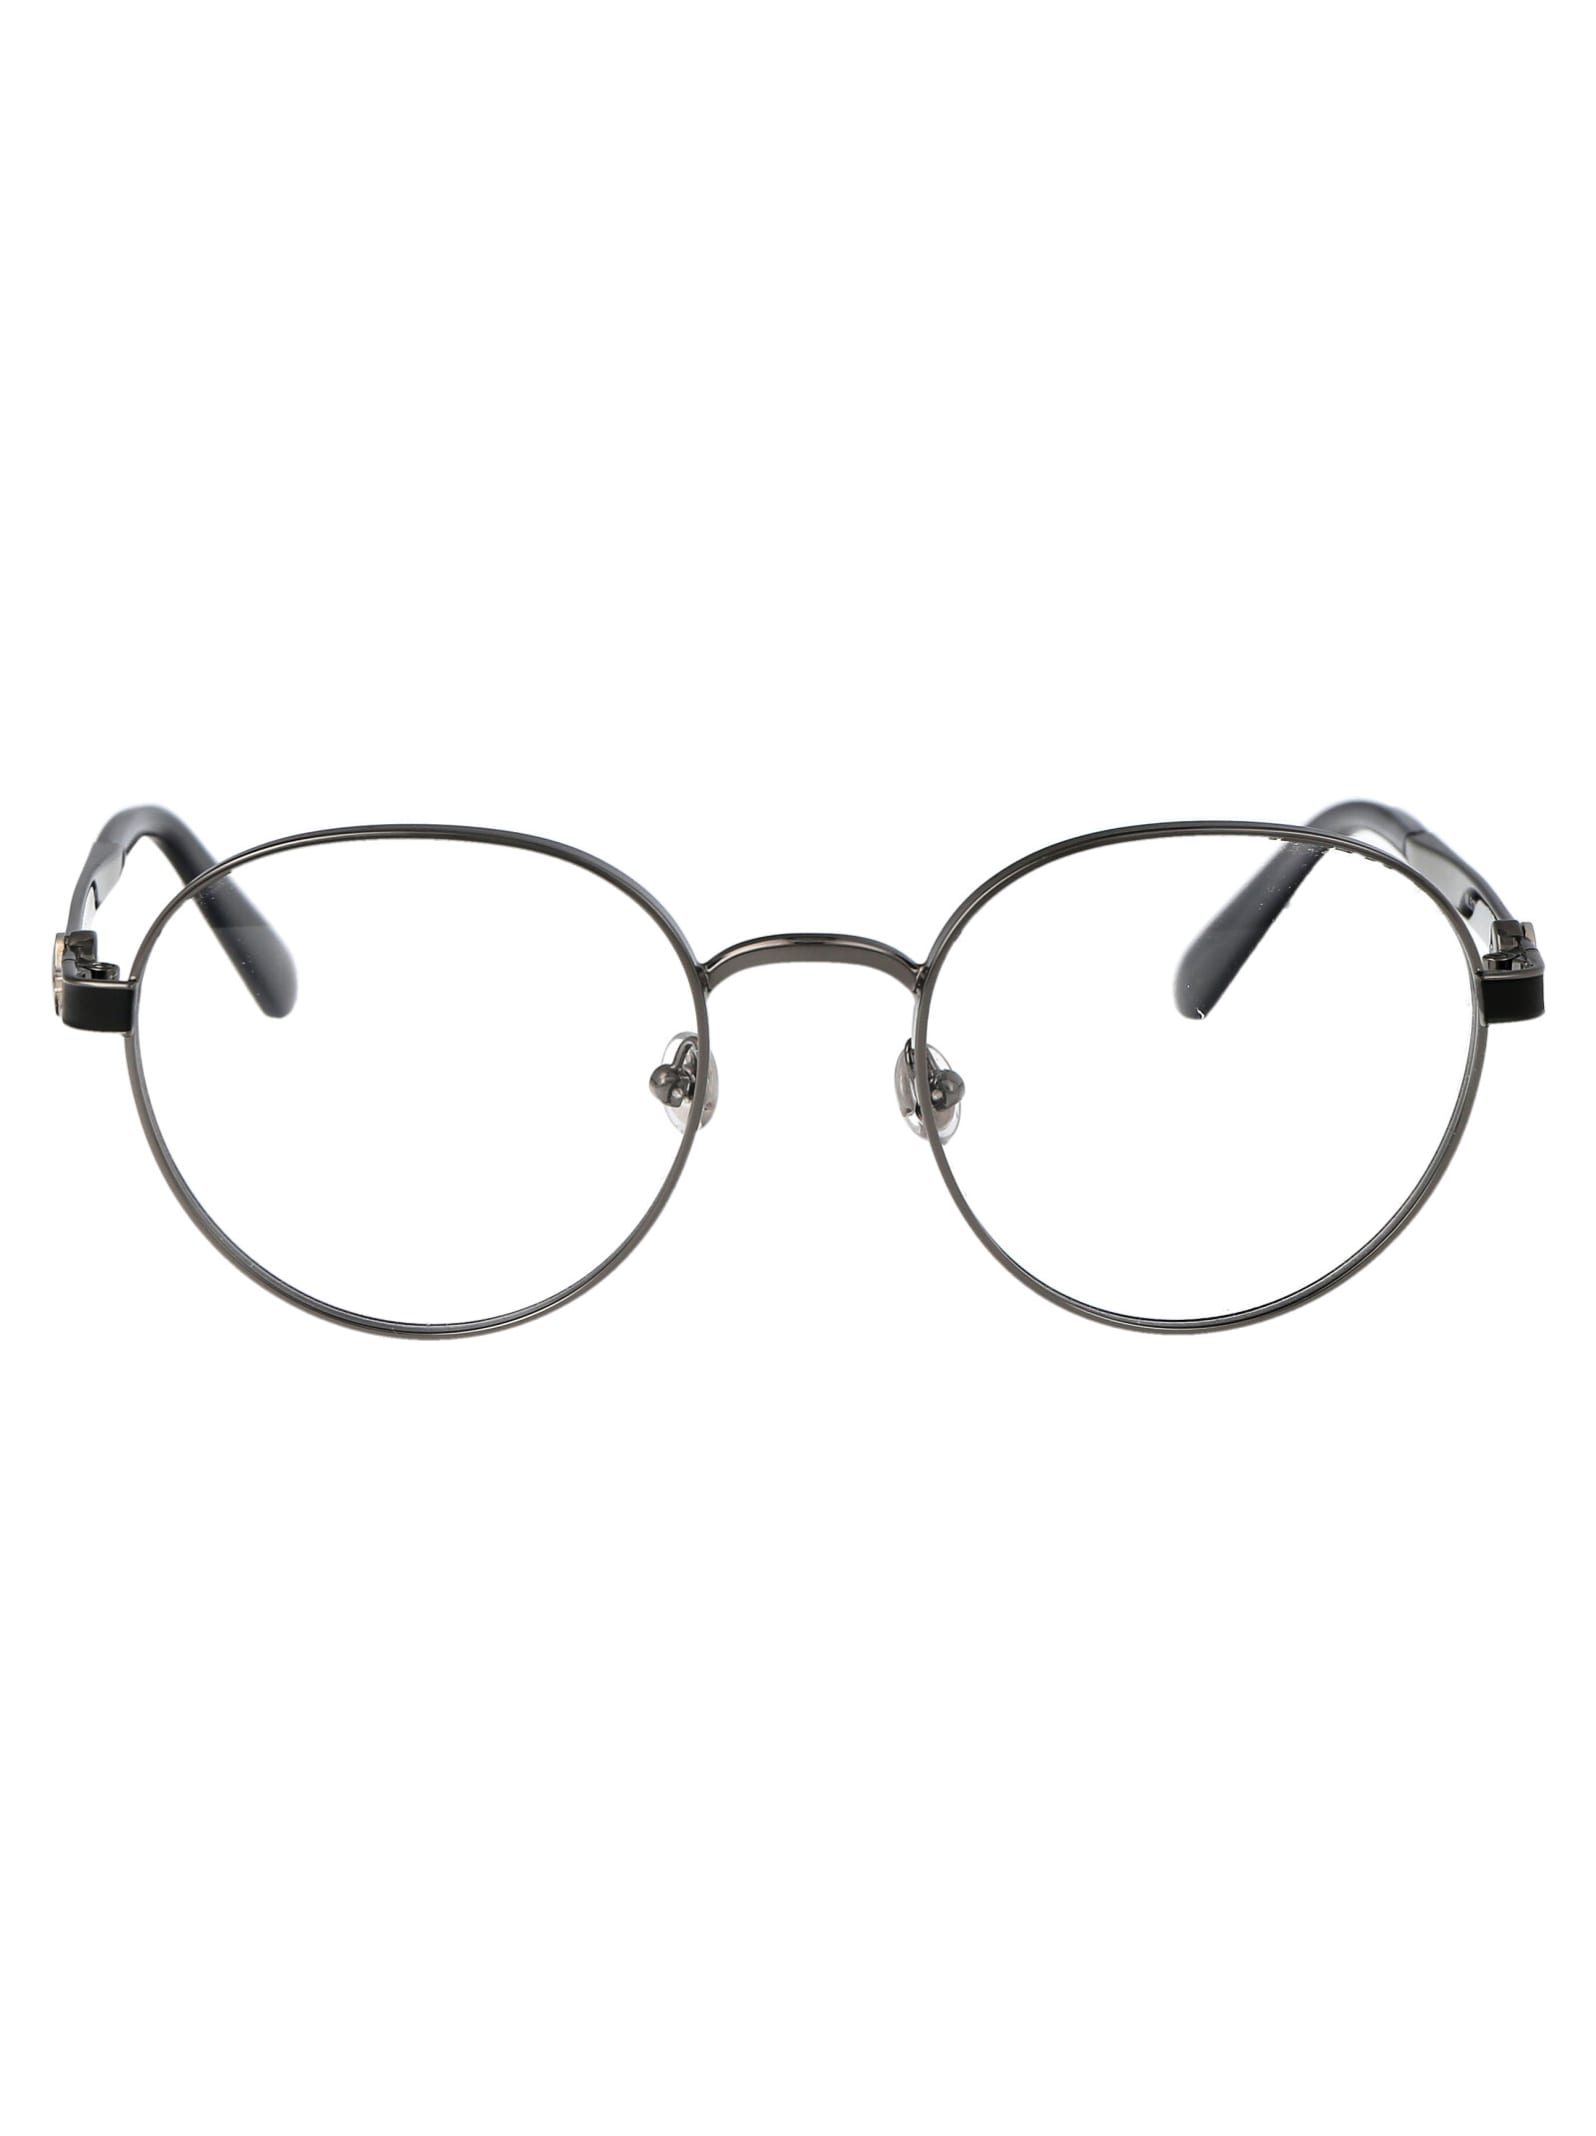 Ml5179 Glasses